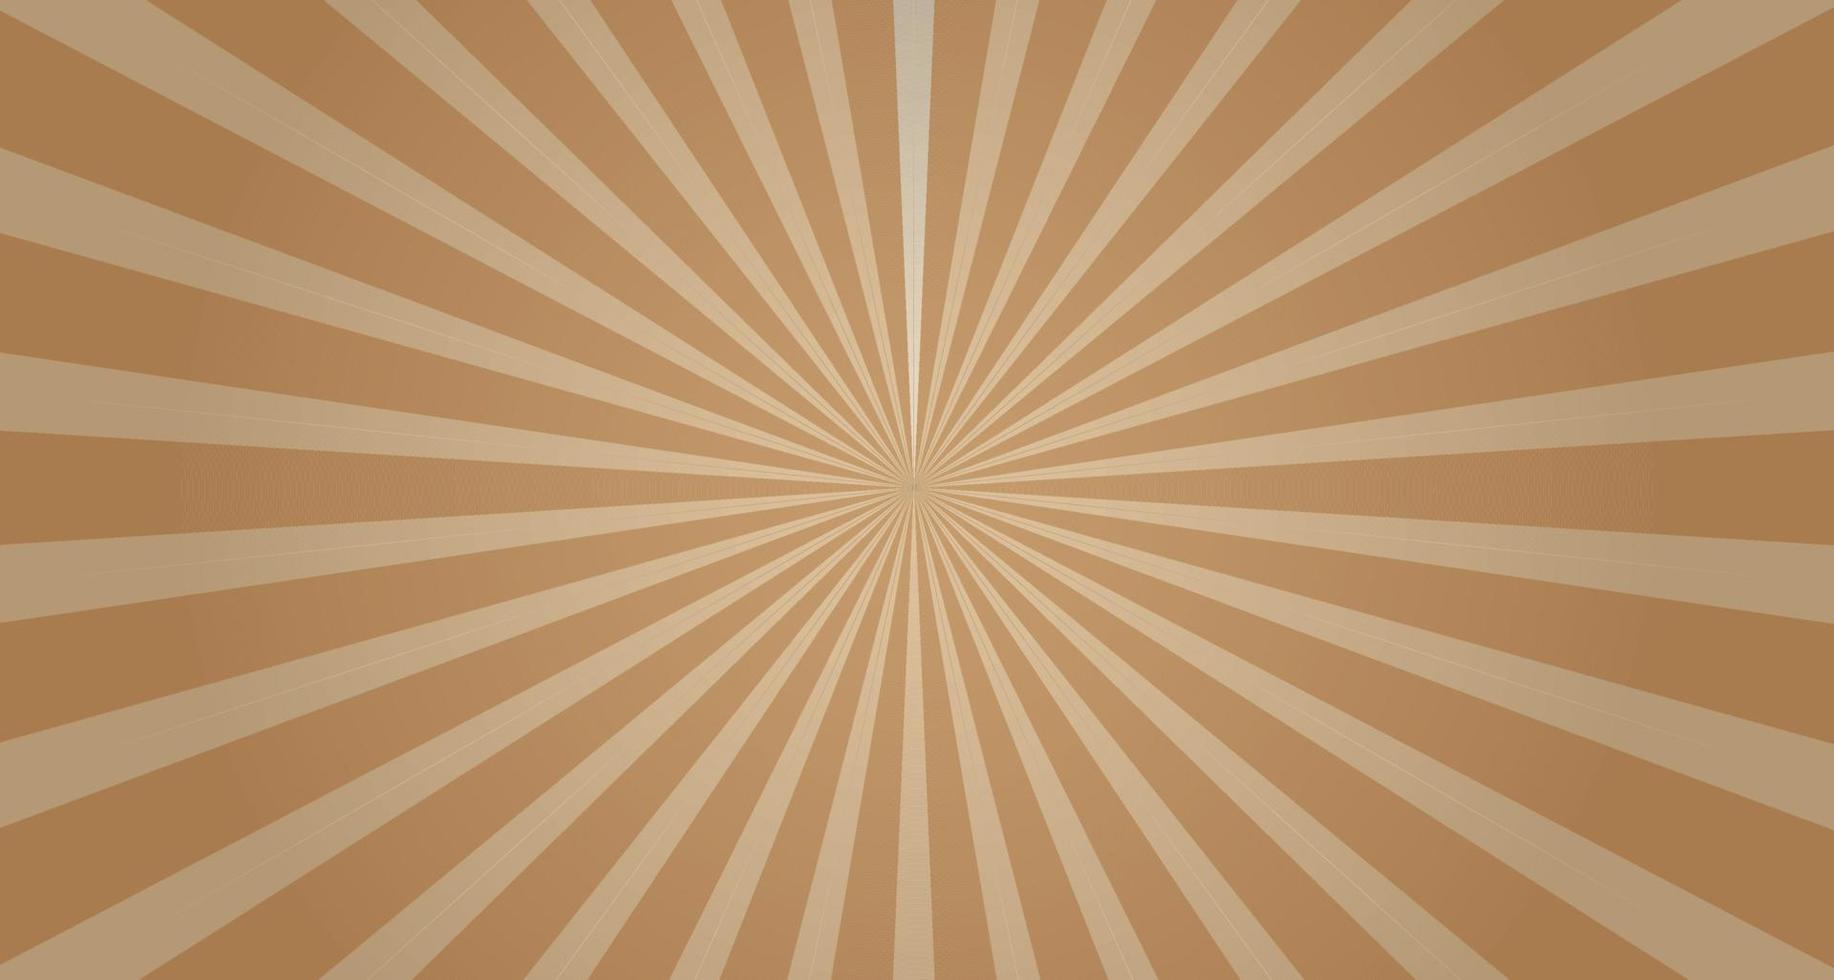 brun sunburst bakgrund vektorgrafik vektor